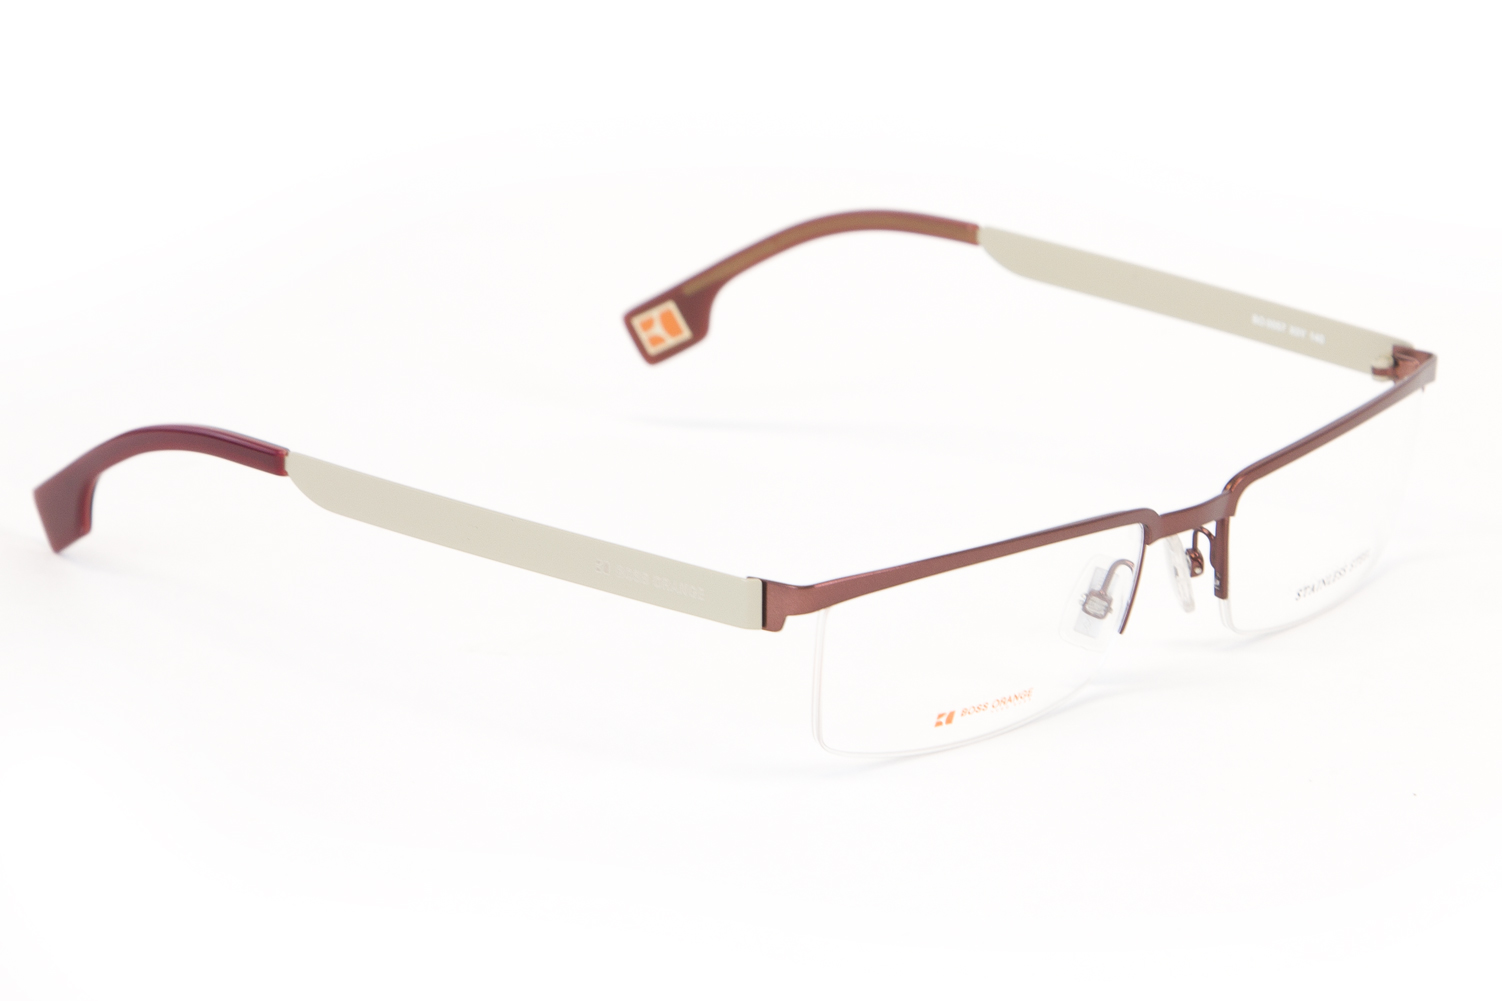 Boss Orange Stainless Steel Semi-Rimless Eyeglass Frames 54mm Burgundy Mud - image 2 of 3